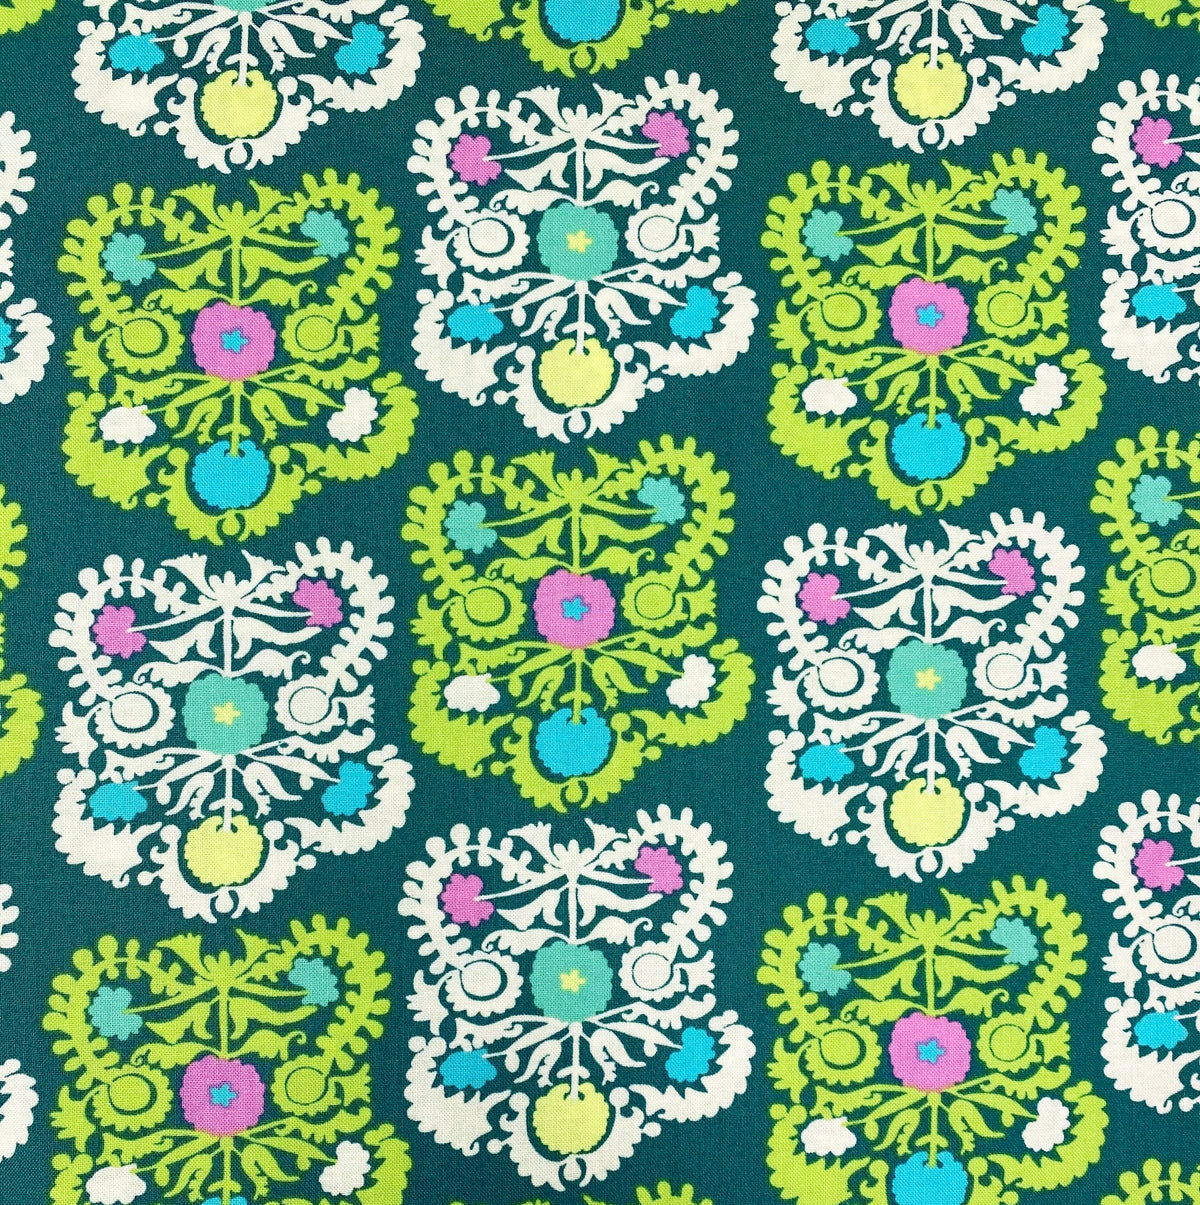 Gypsy Embroidery Lake | Dream Weaver | Free Spirit Fabrics